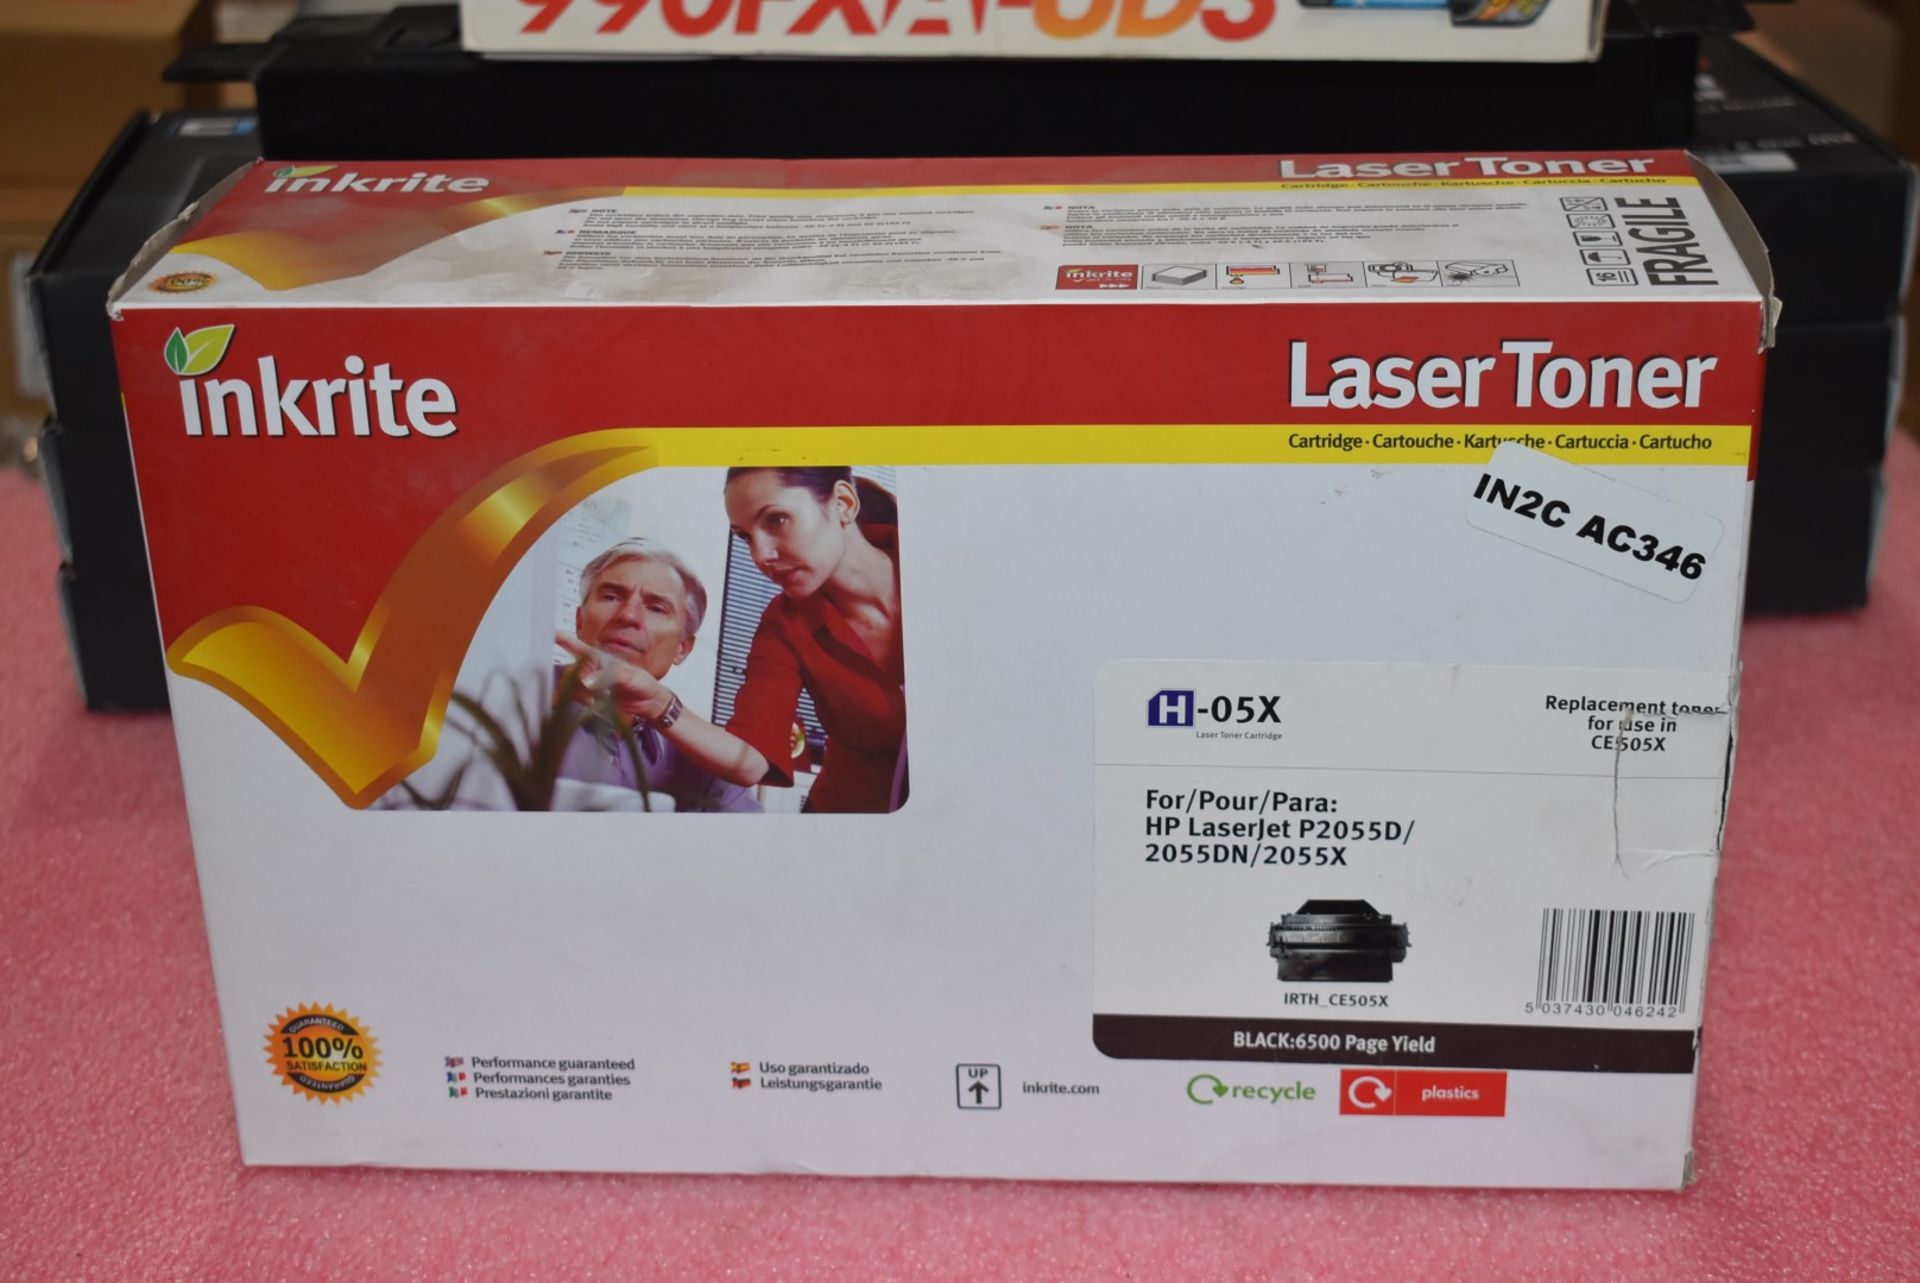 1 x Inkrite H-05X Toner Cartridge For HP LaserJet P2055D / 2055N / 2055X Laser Printers - Image 2 of 2